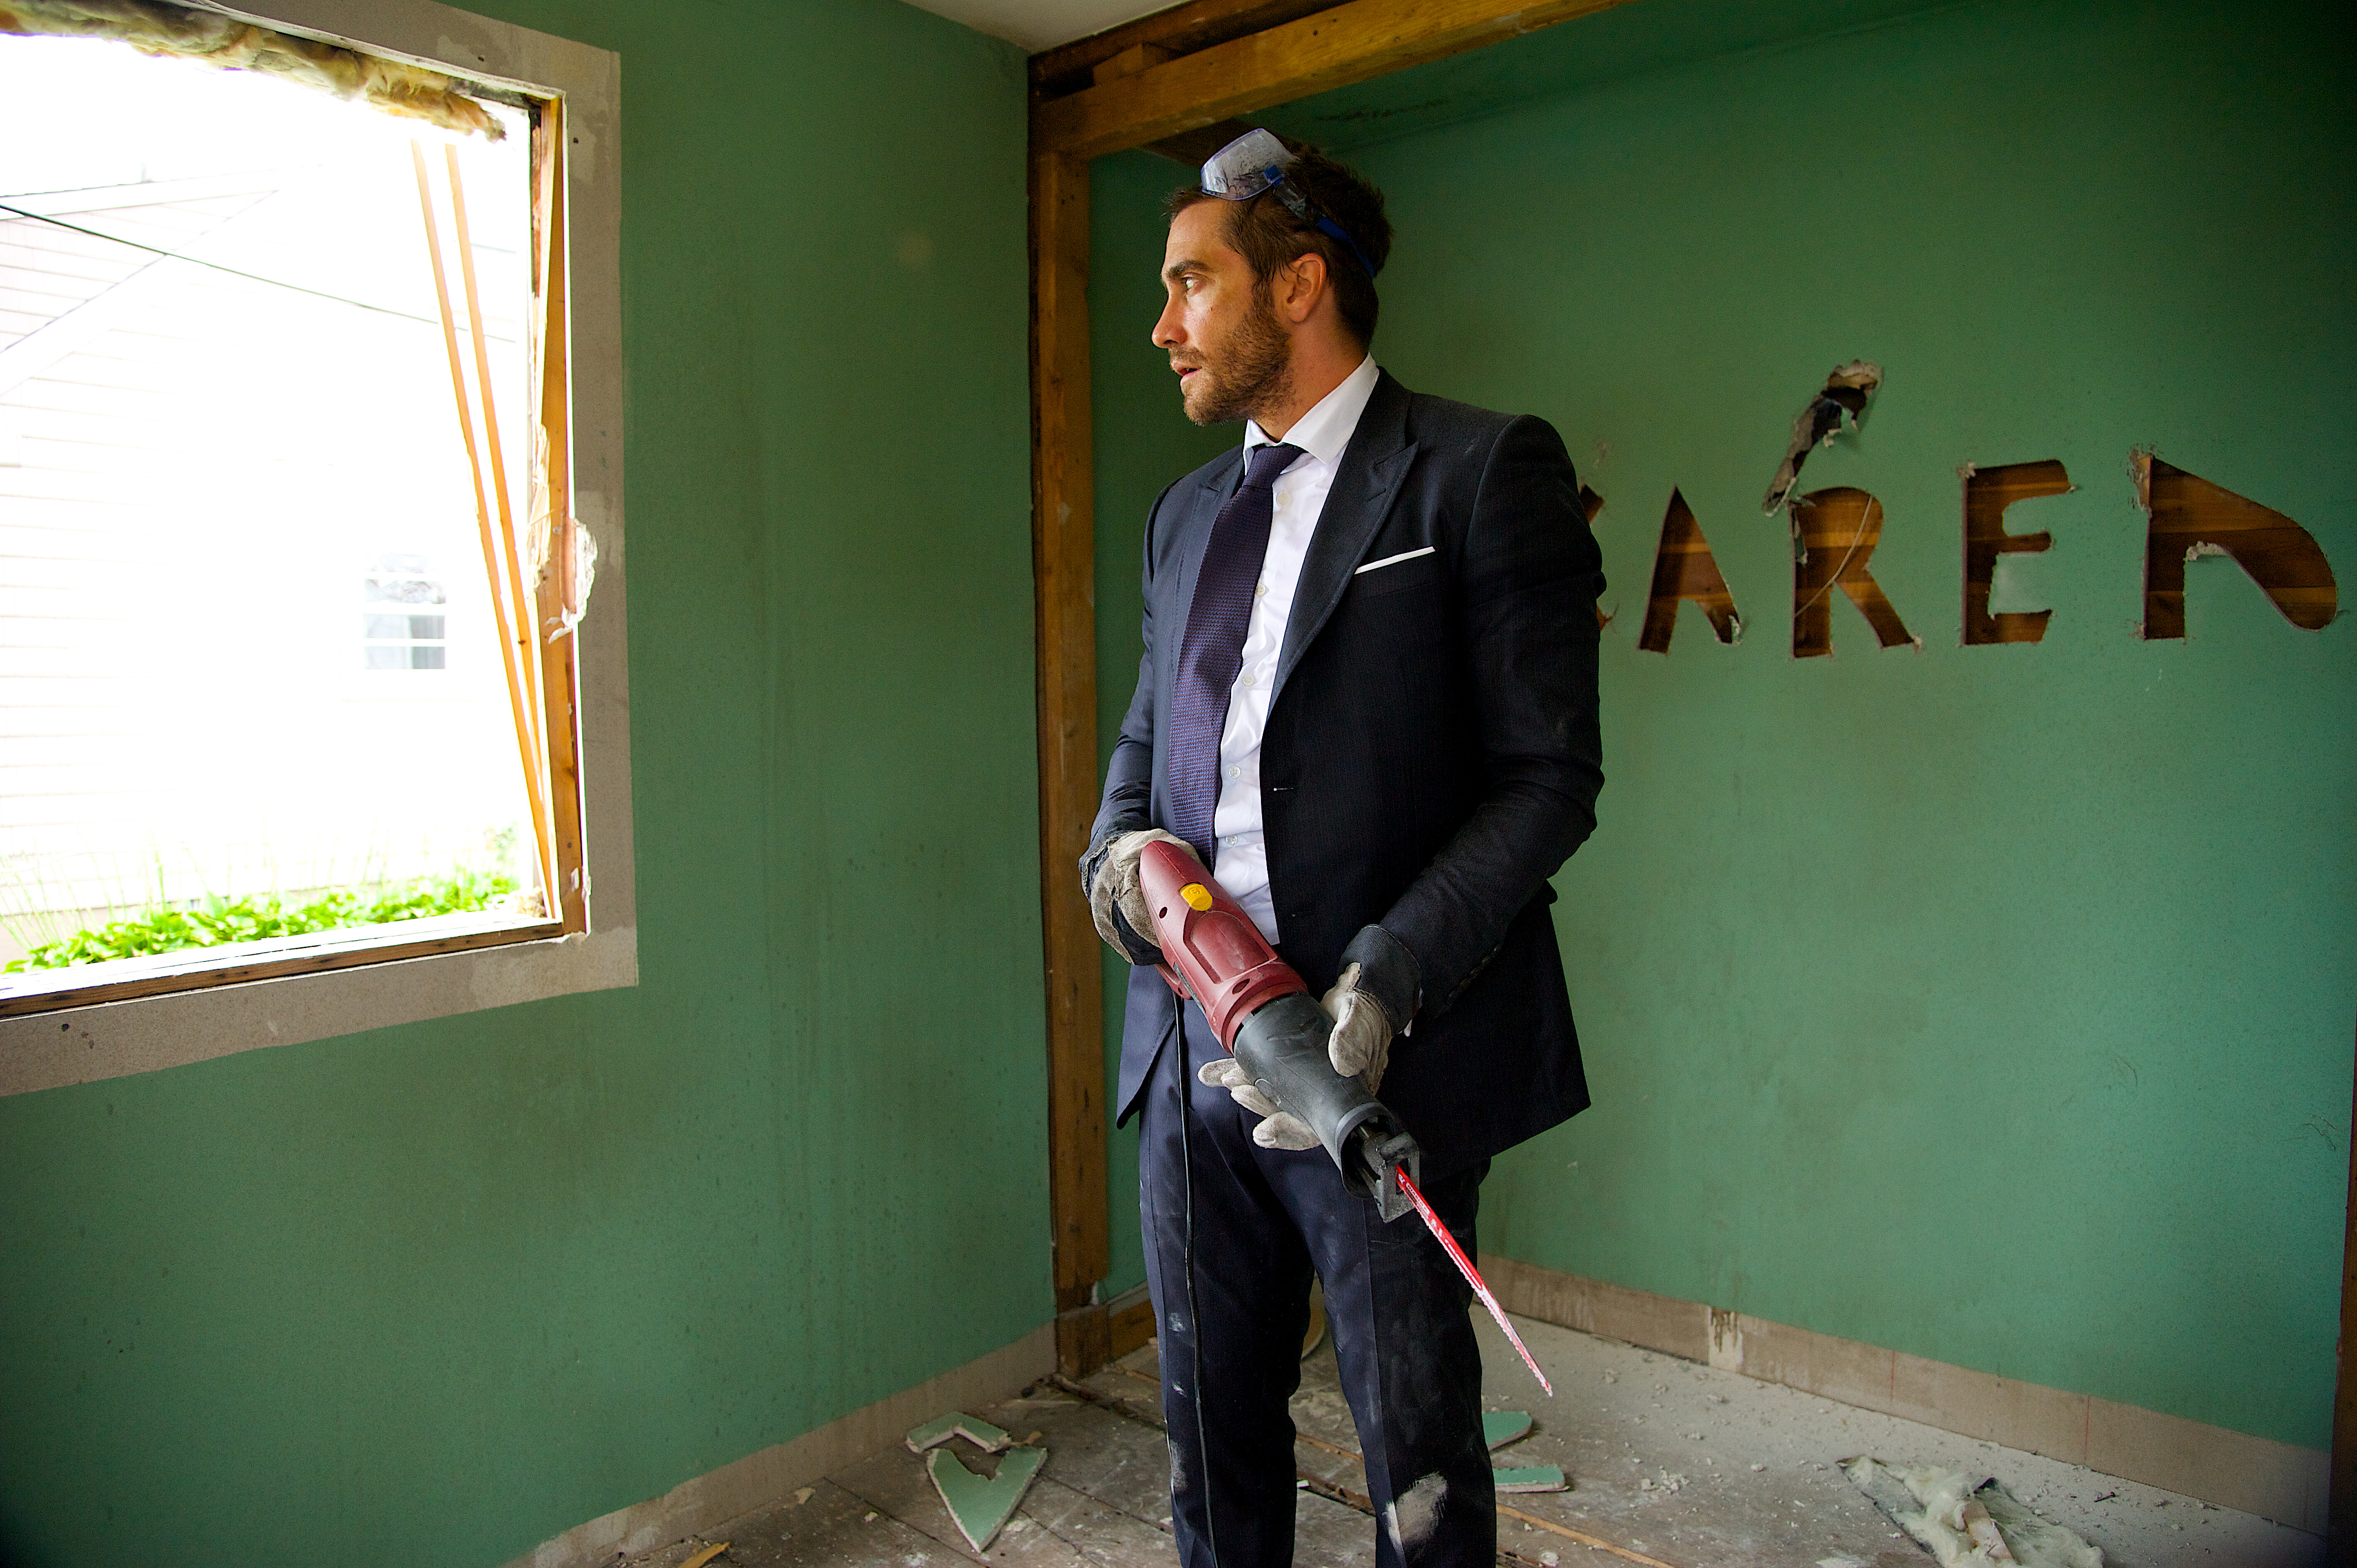 Gyllenhaal breaks down, rebuilds in offbeat comedy ‘Demolition’